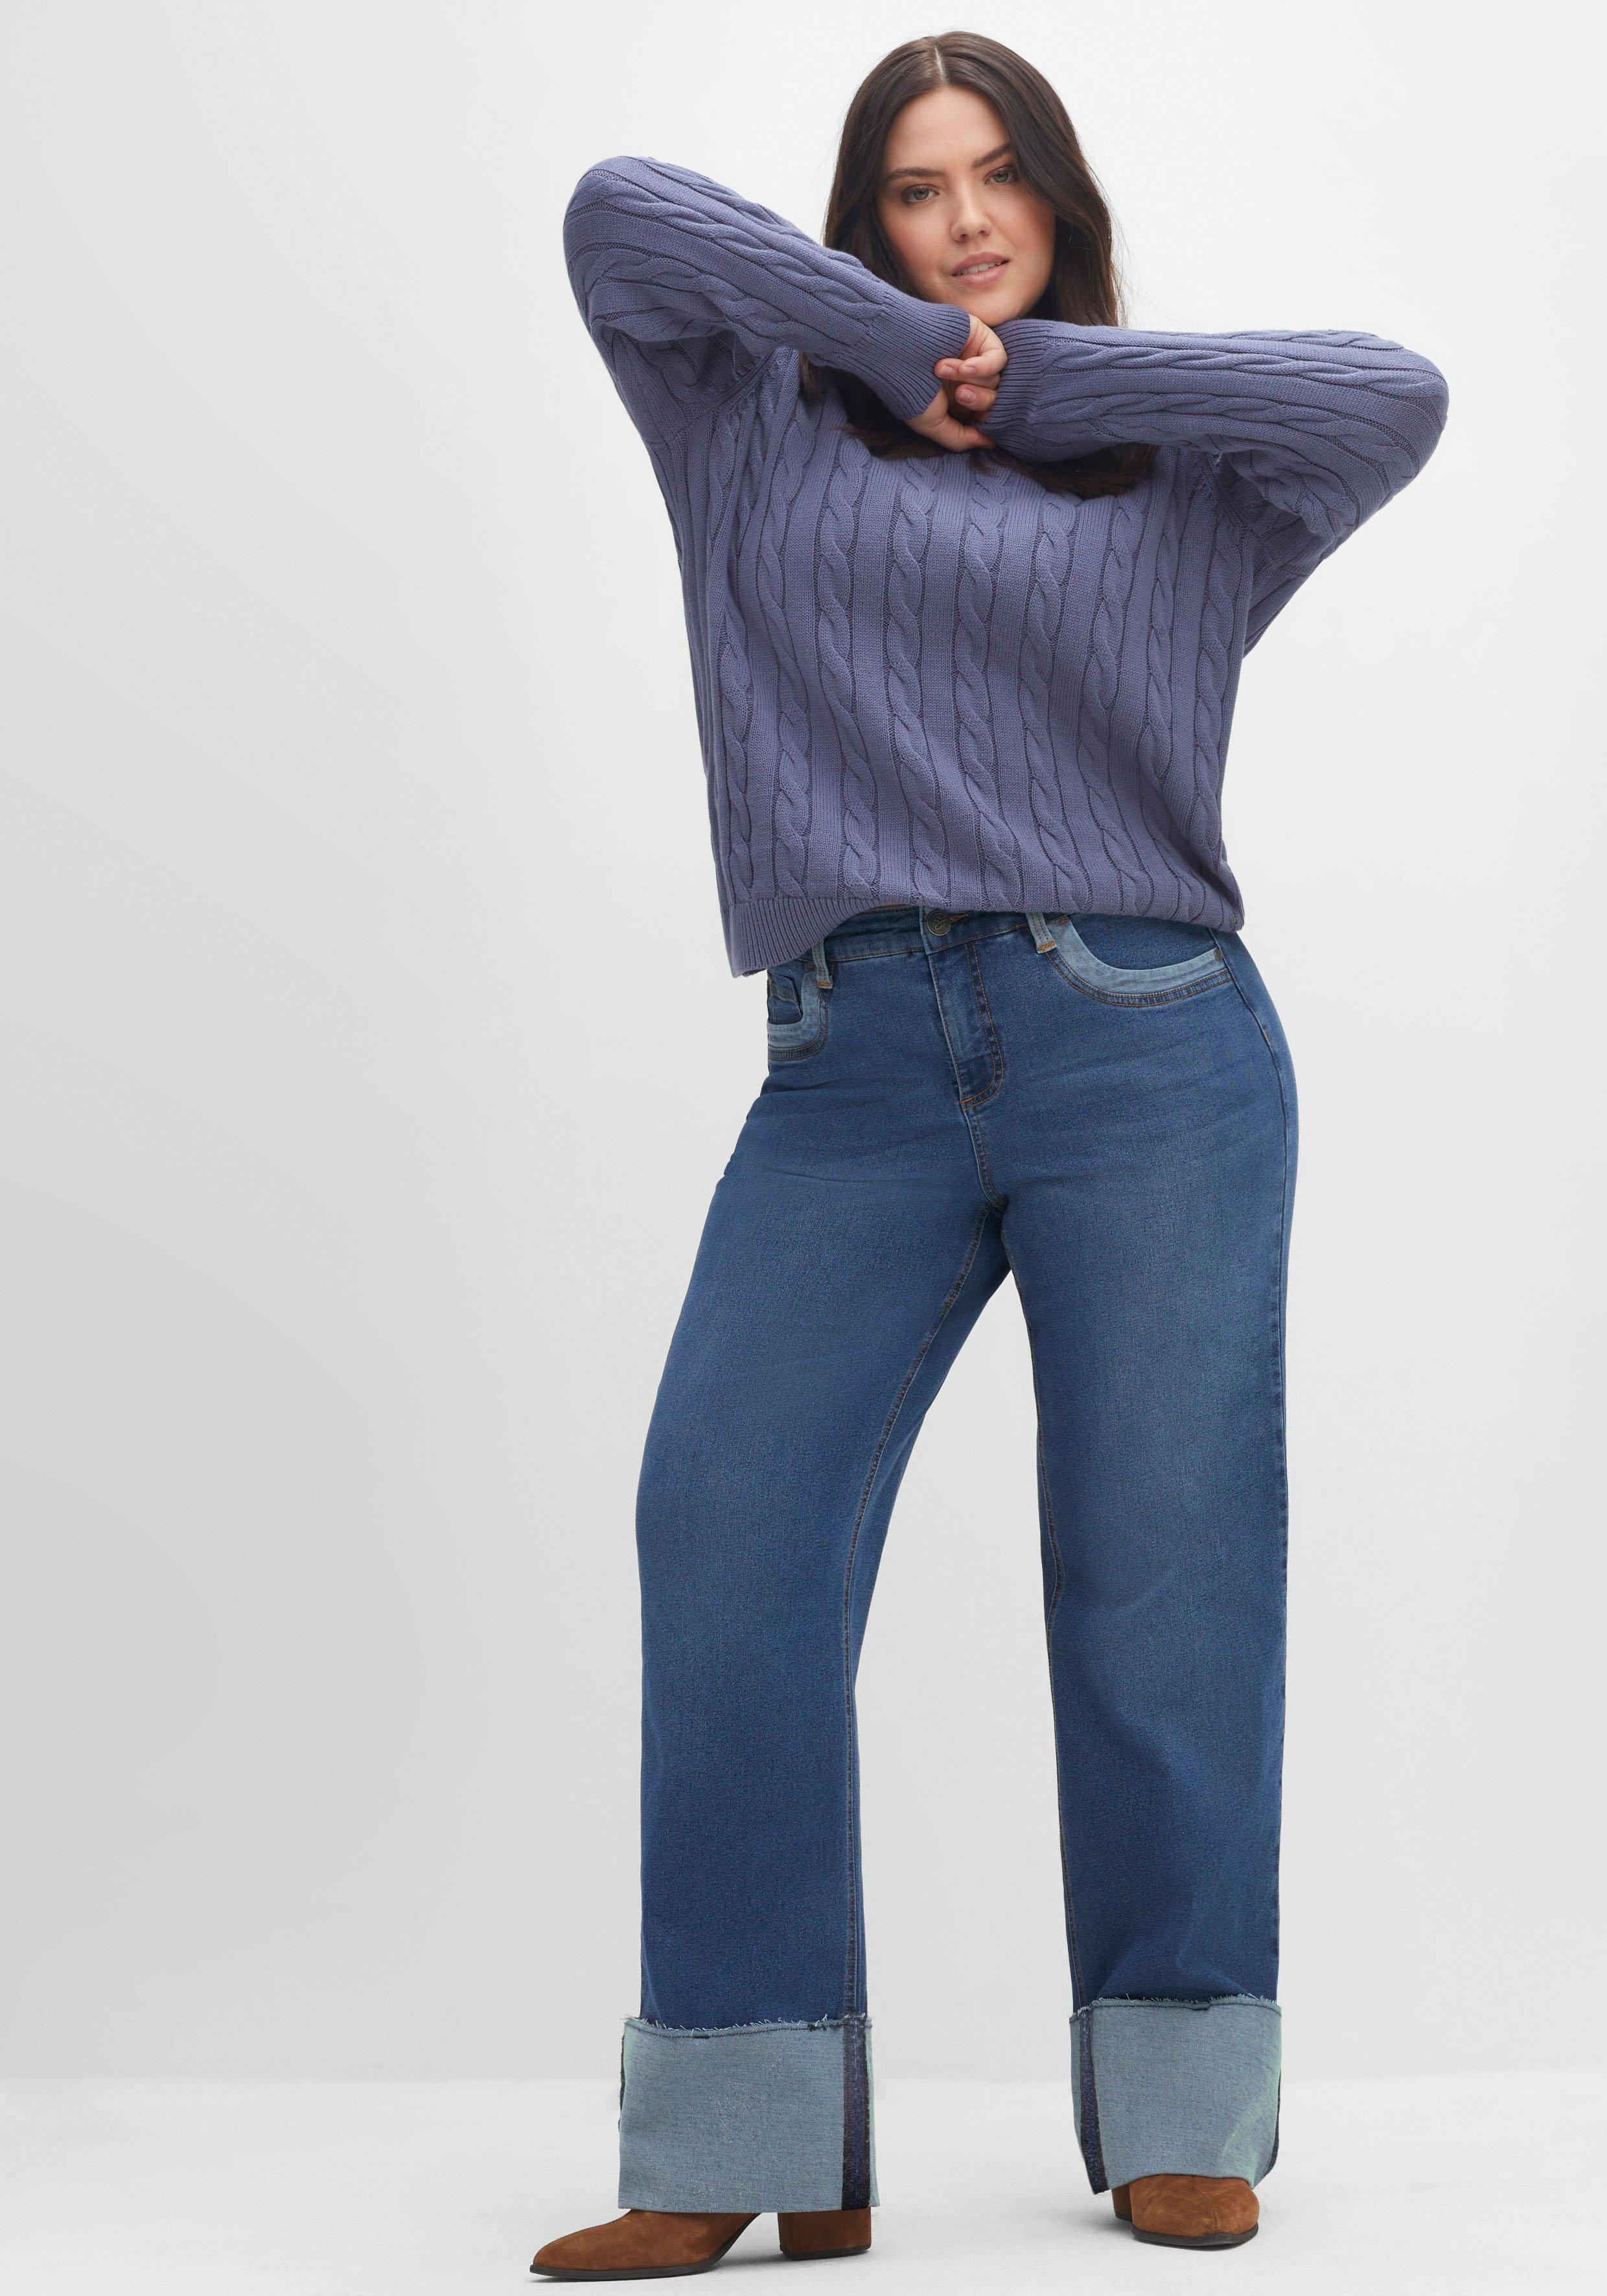 Jeansjacke in Form - blue Denim mit kastiger | Halbarm kurzer, sheego